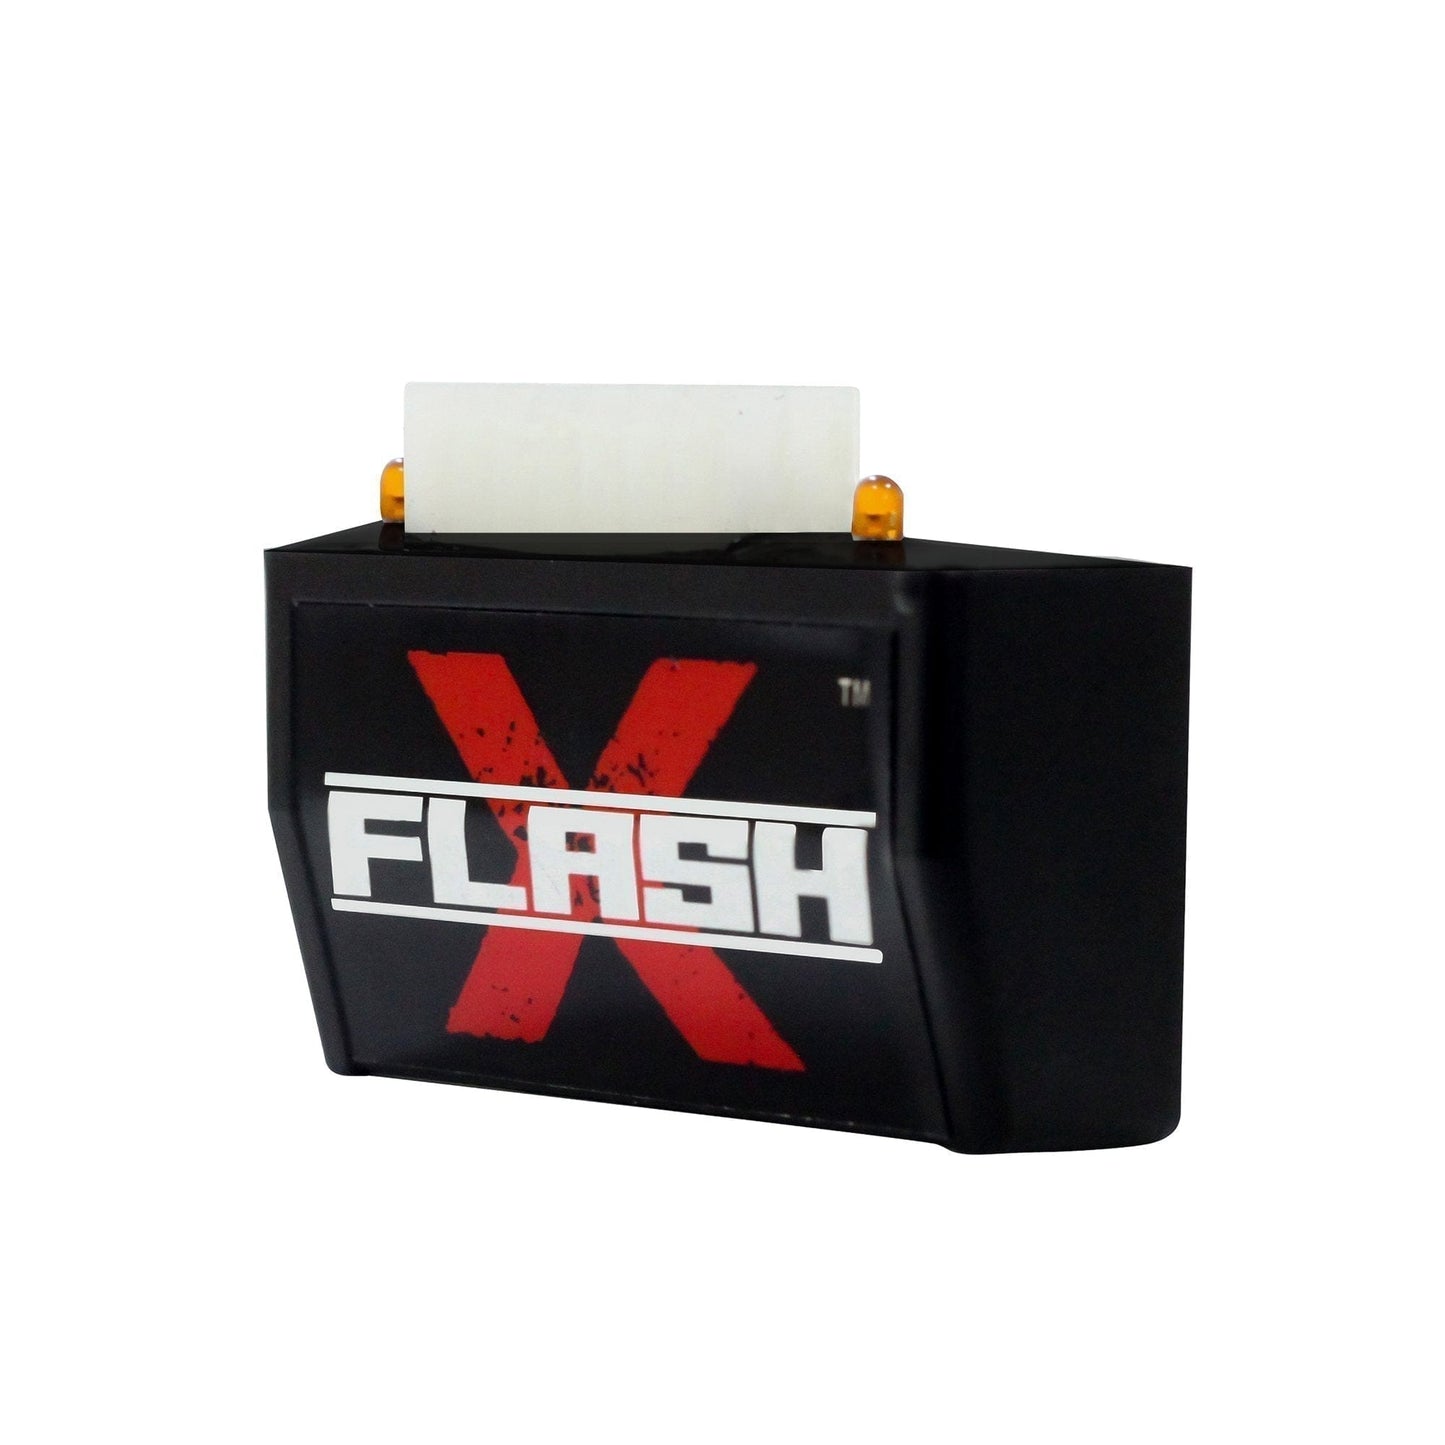 Destination Moto Hero Xpulse Flash X Hazard Lights Flash Module, Blinker,Flasher BS 6